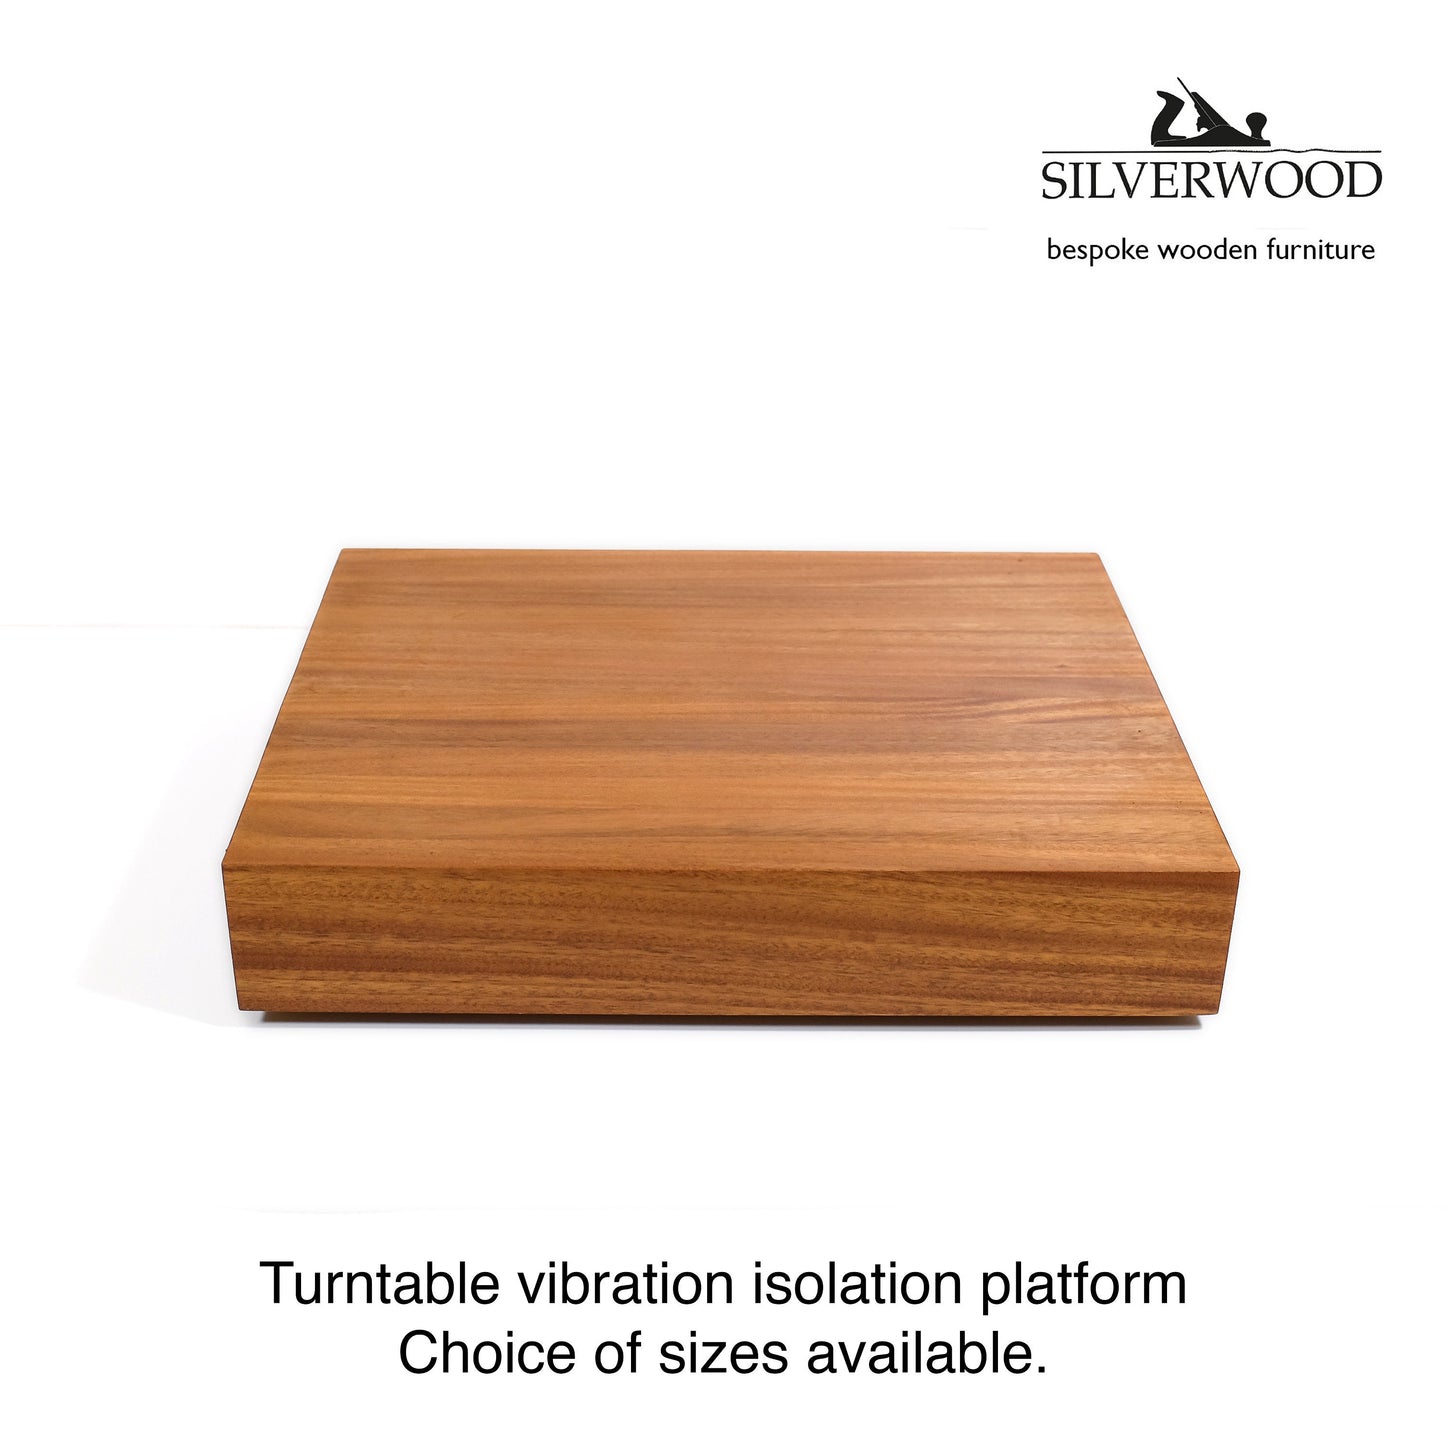 Turntable vibration isolation platform.  Oak, walnut or maple edge grain.  Custom made to order.